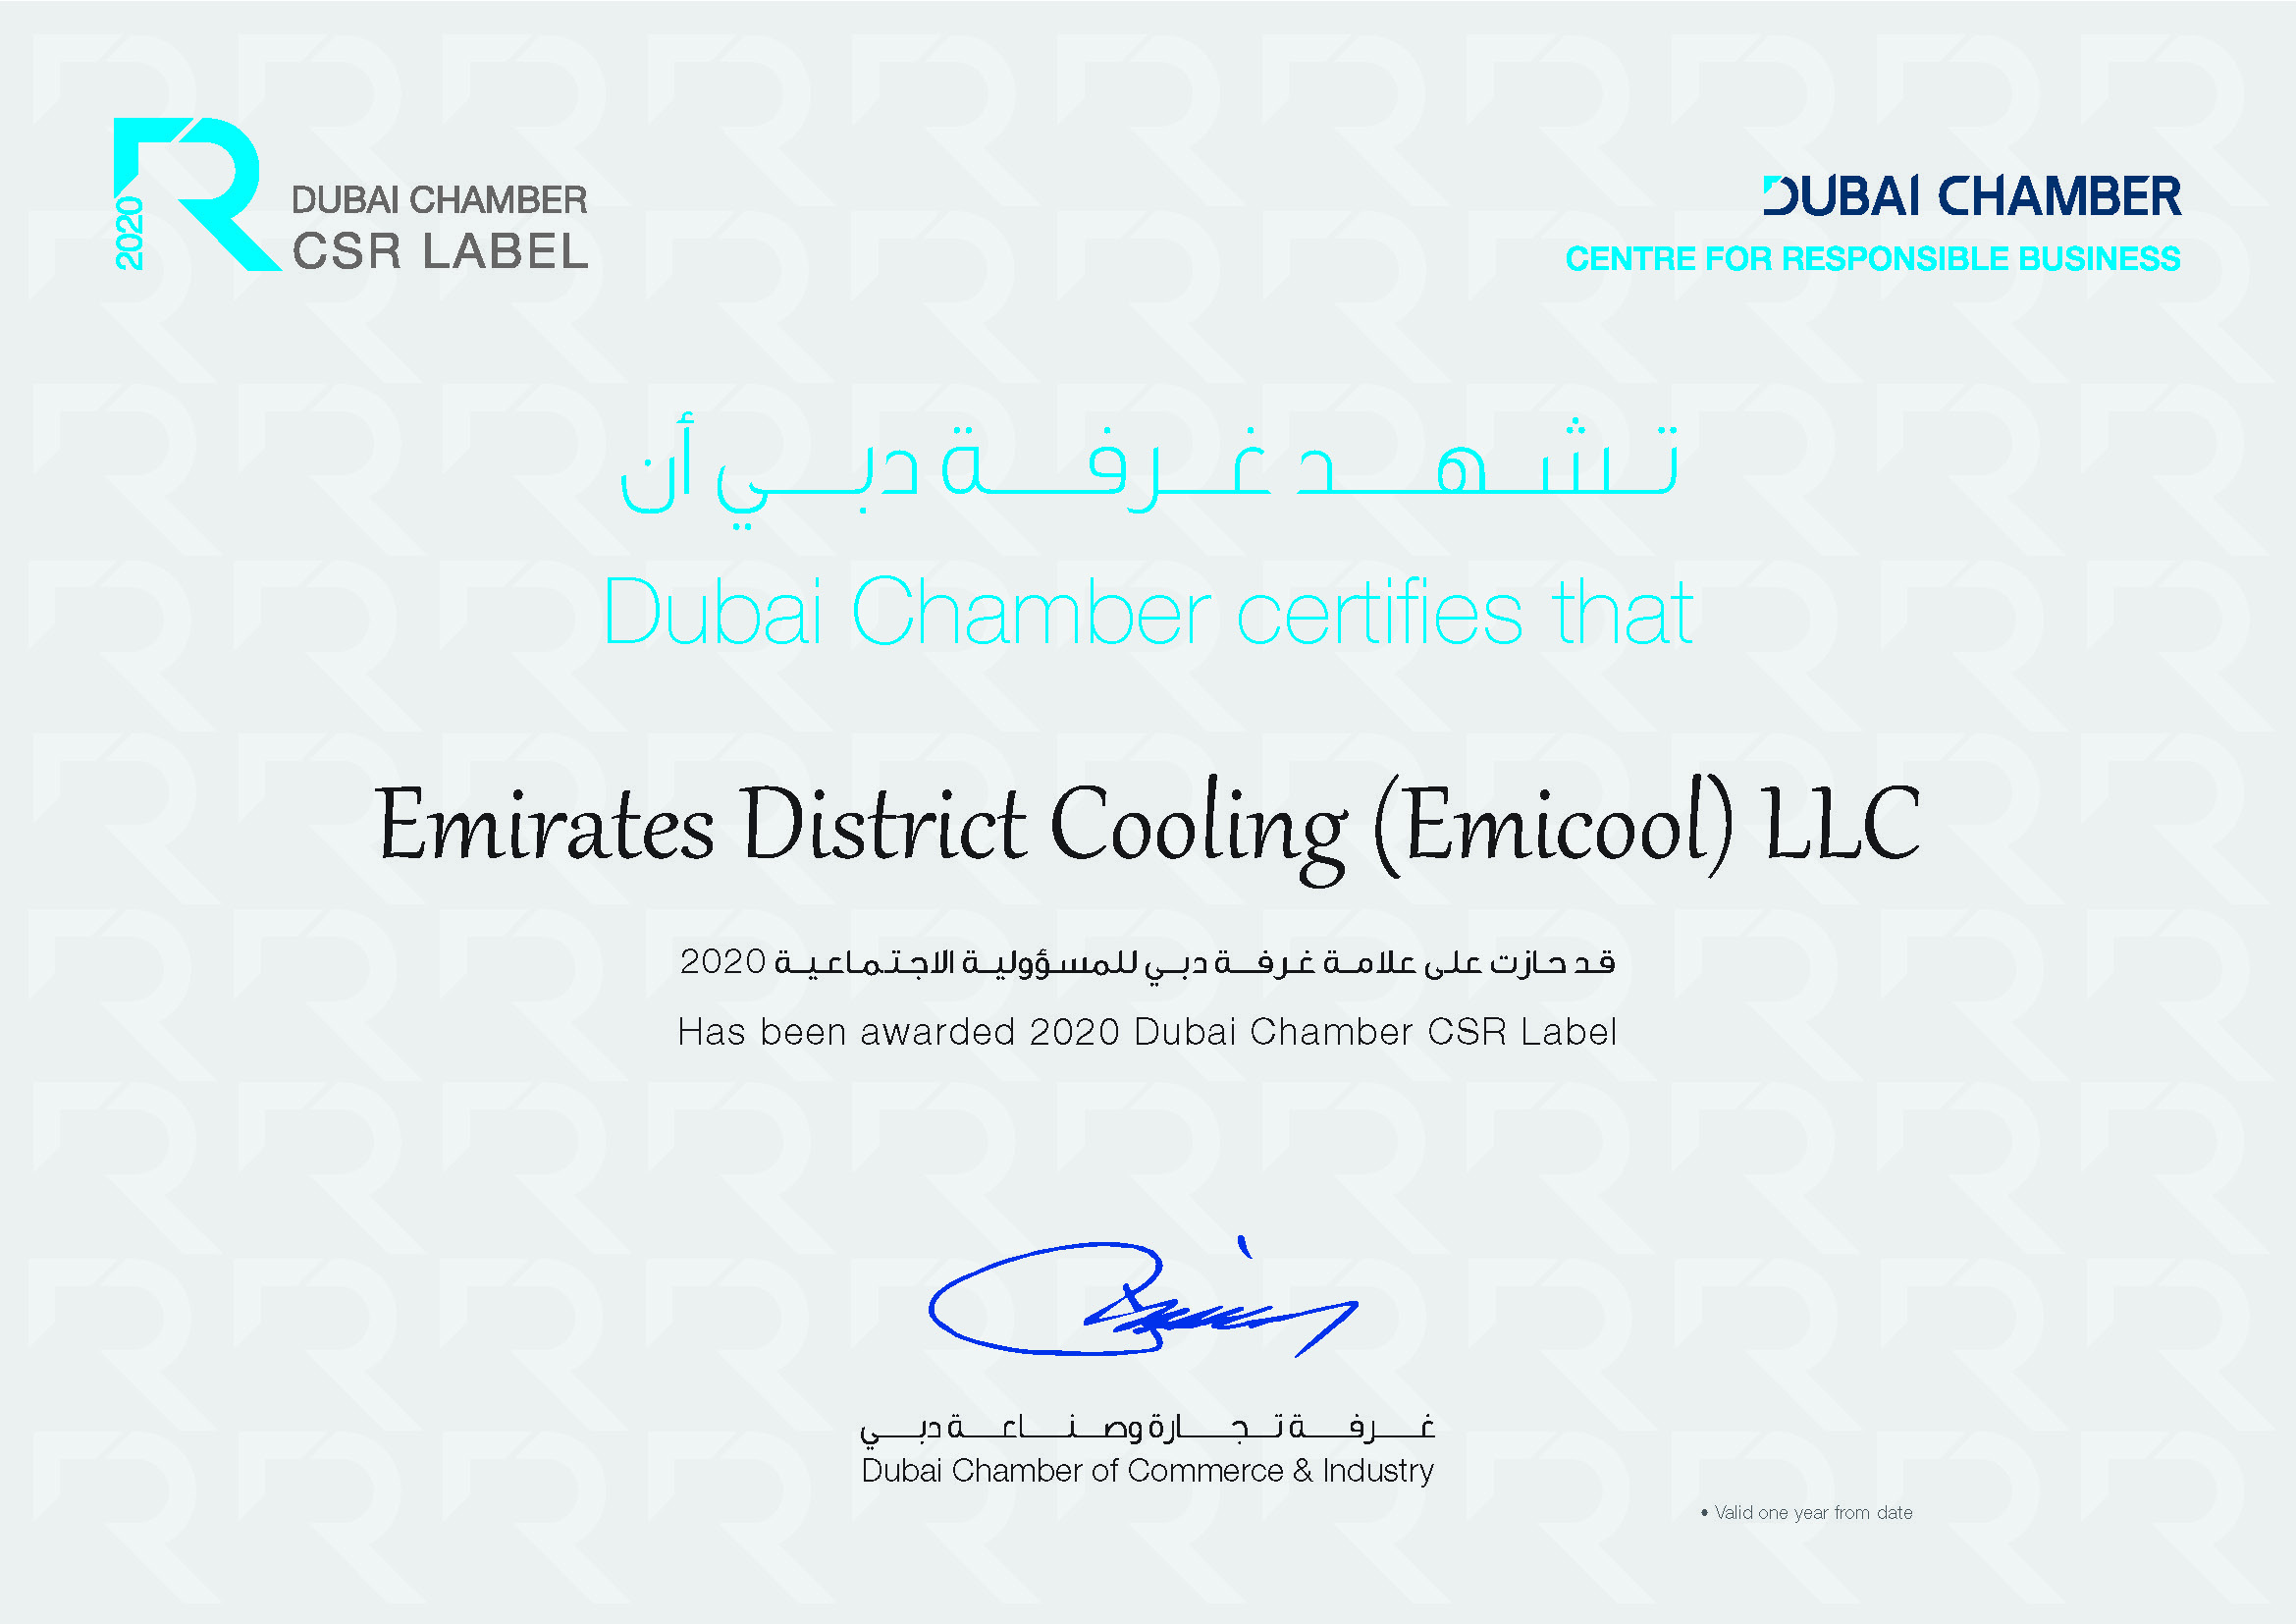 Dubai Chamber – CSR Label 2020